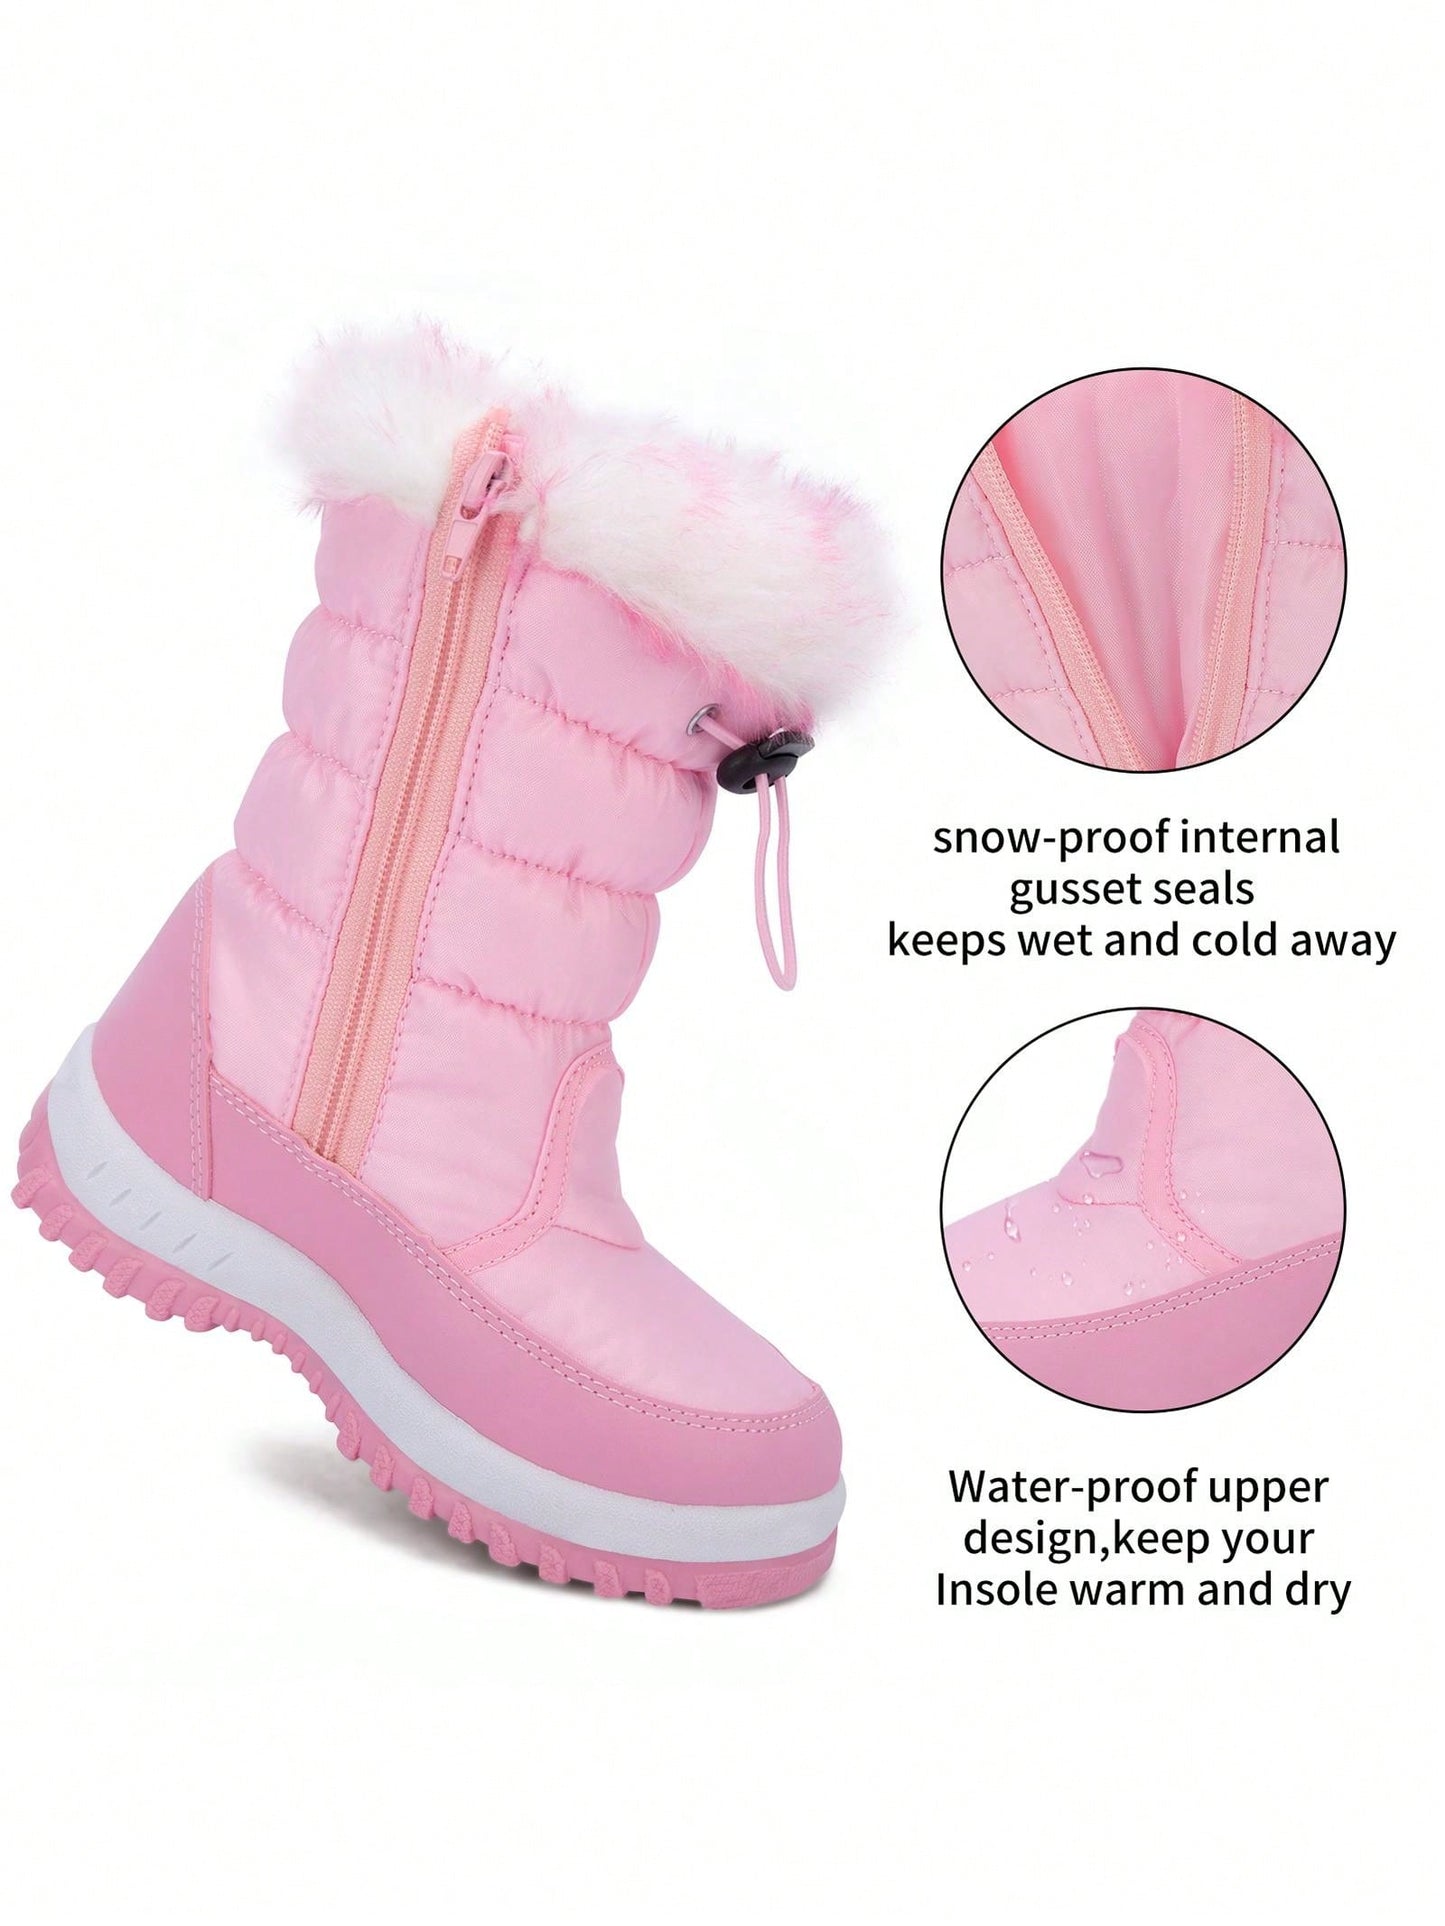 Little Girls Snowflake Themed Warm Outdoor Waterproof Slip Resistant Cold Weather Winter Snow Boots KIDS SZ 9.5-2.5 🔥